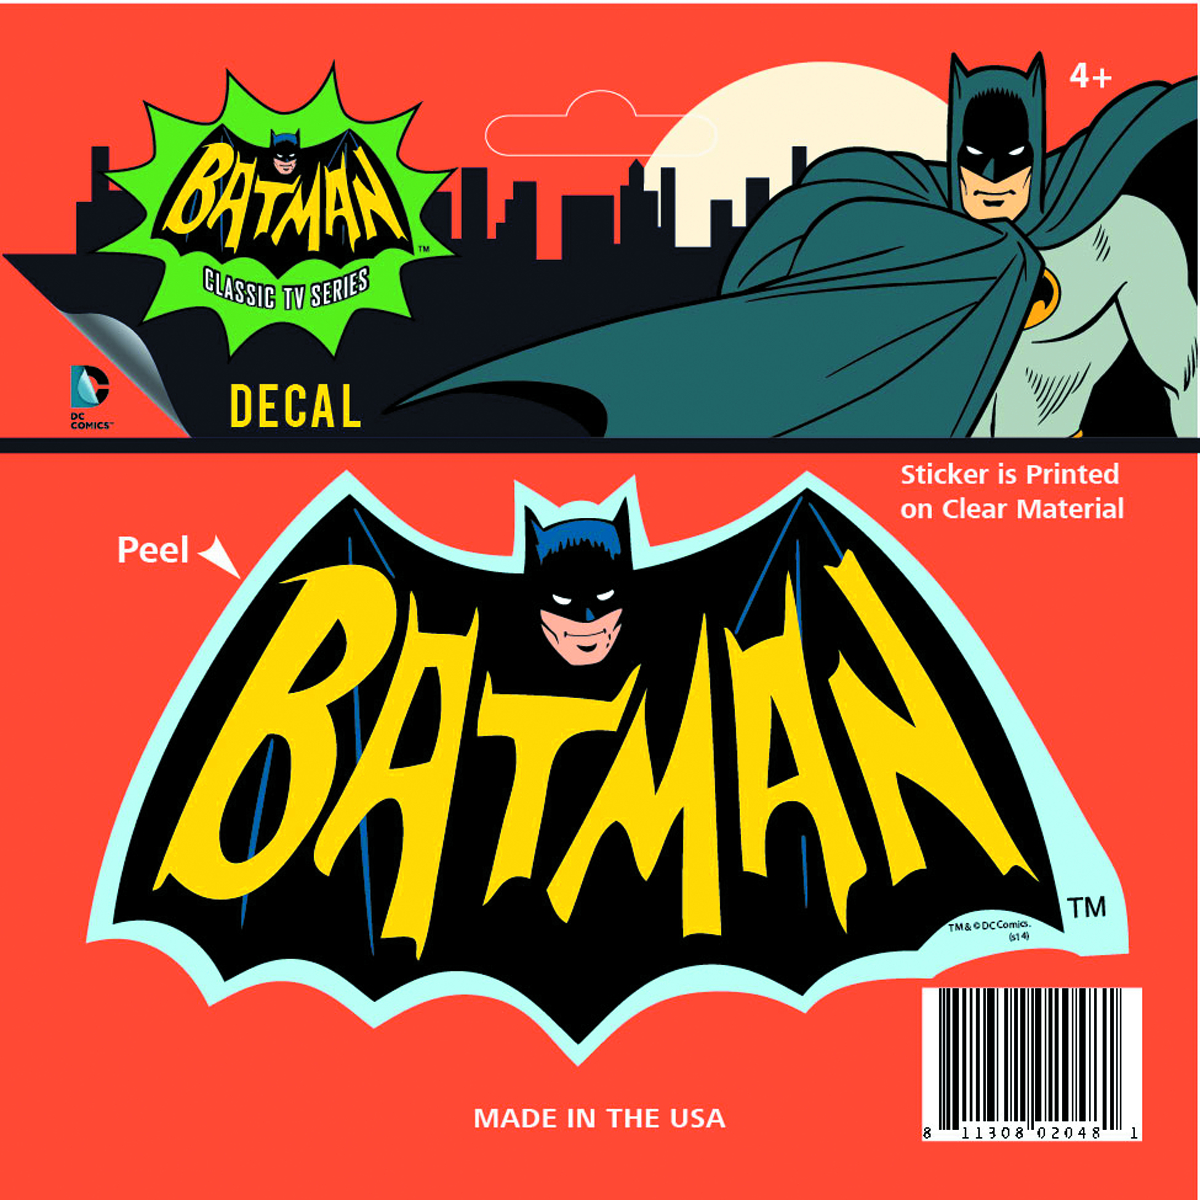 Sticker Studio Batman Wall Sticker